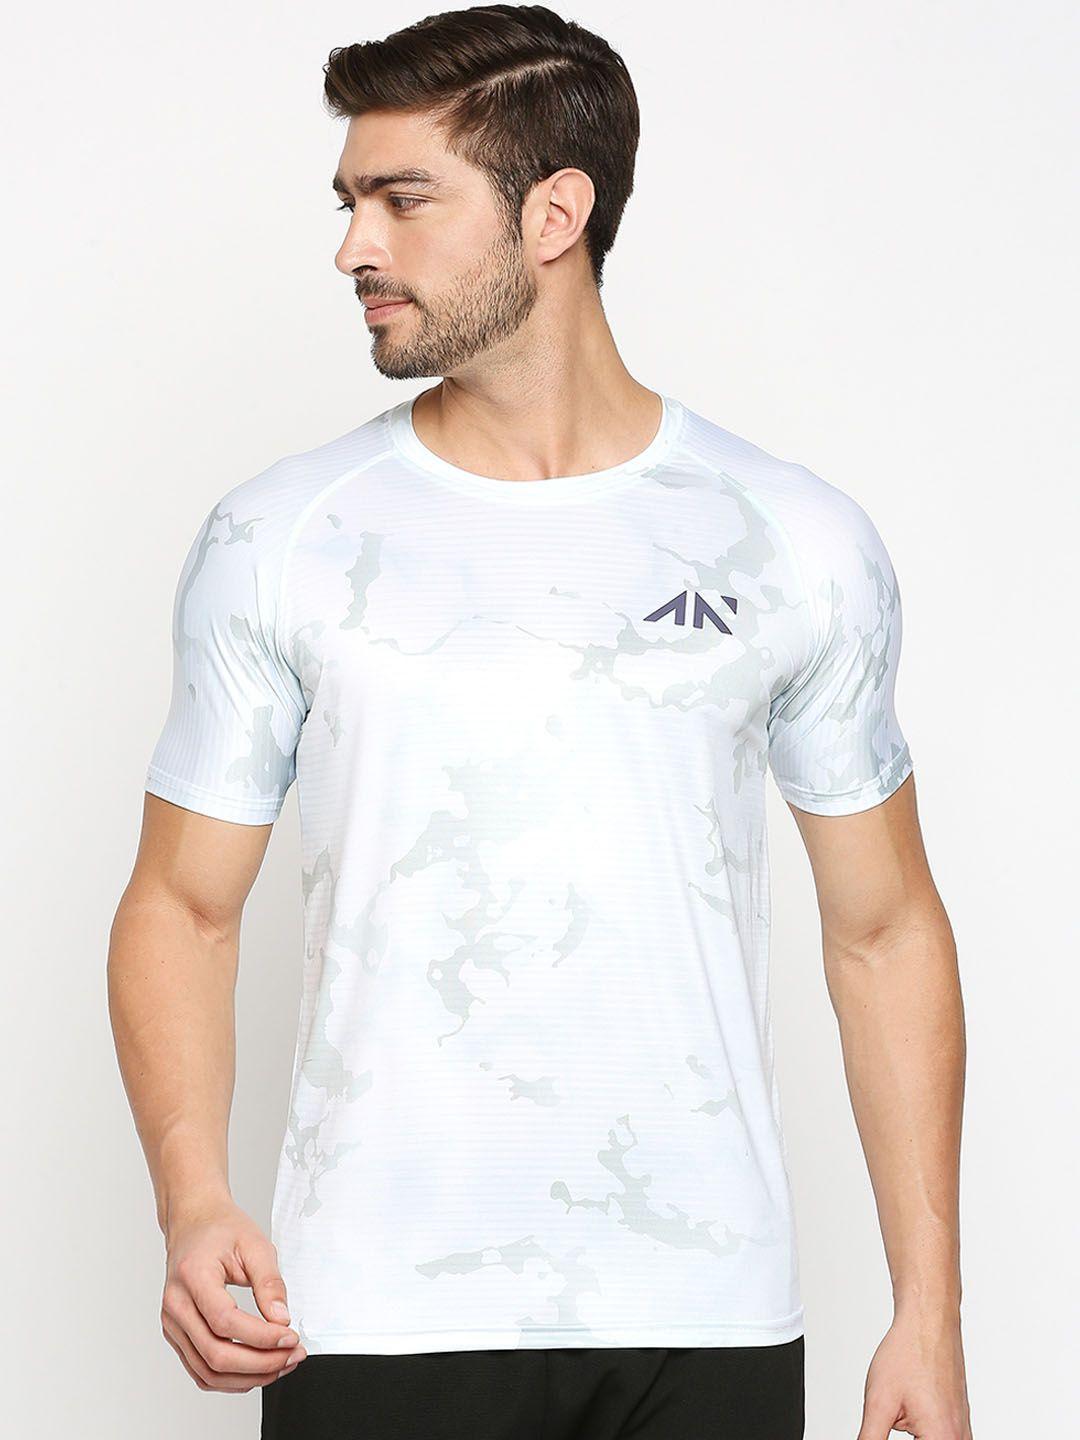 aesthetic nation men white printed dri-fit t-shirt